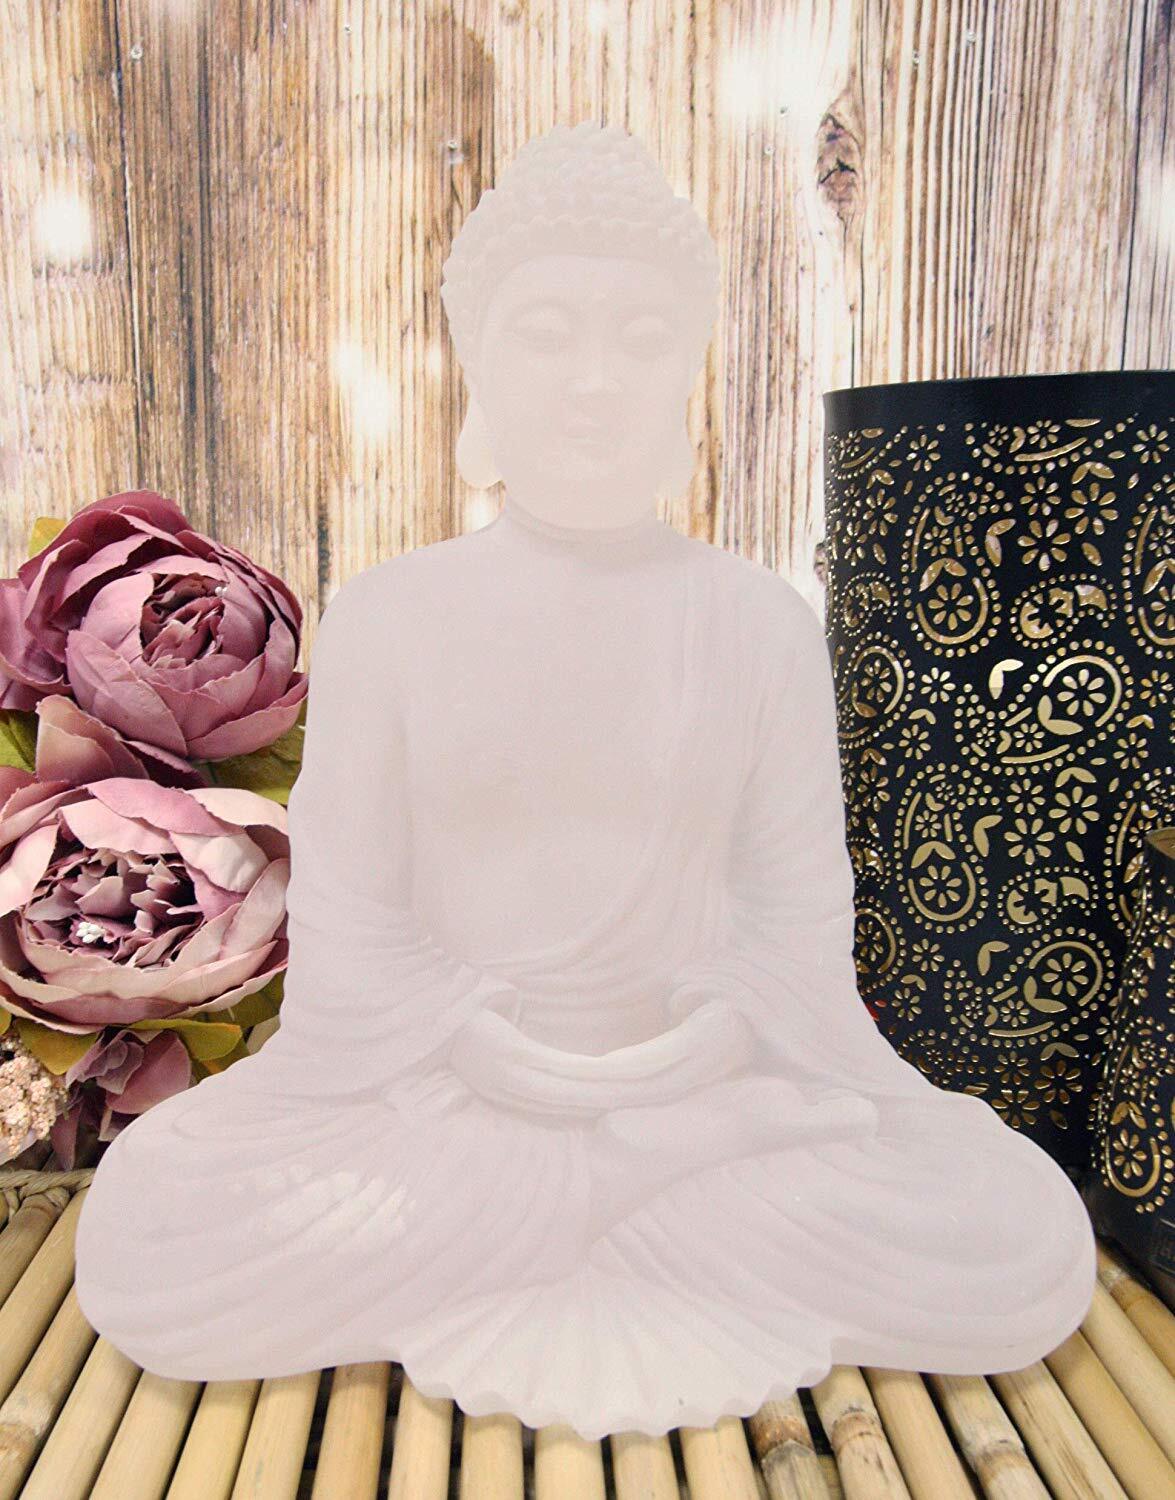 Ebros Feng Shui Acrylic Buddha Shakyamuni Sitting in Meditation Statue 11.5